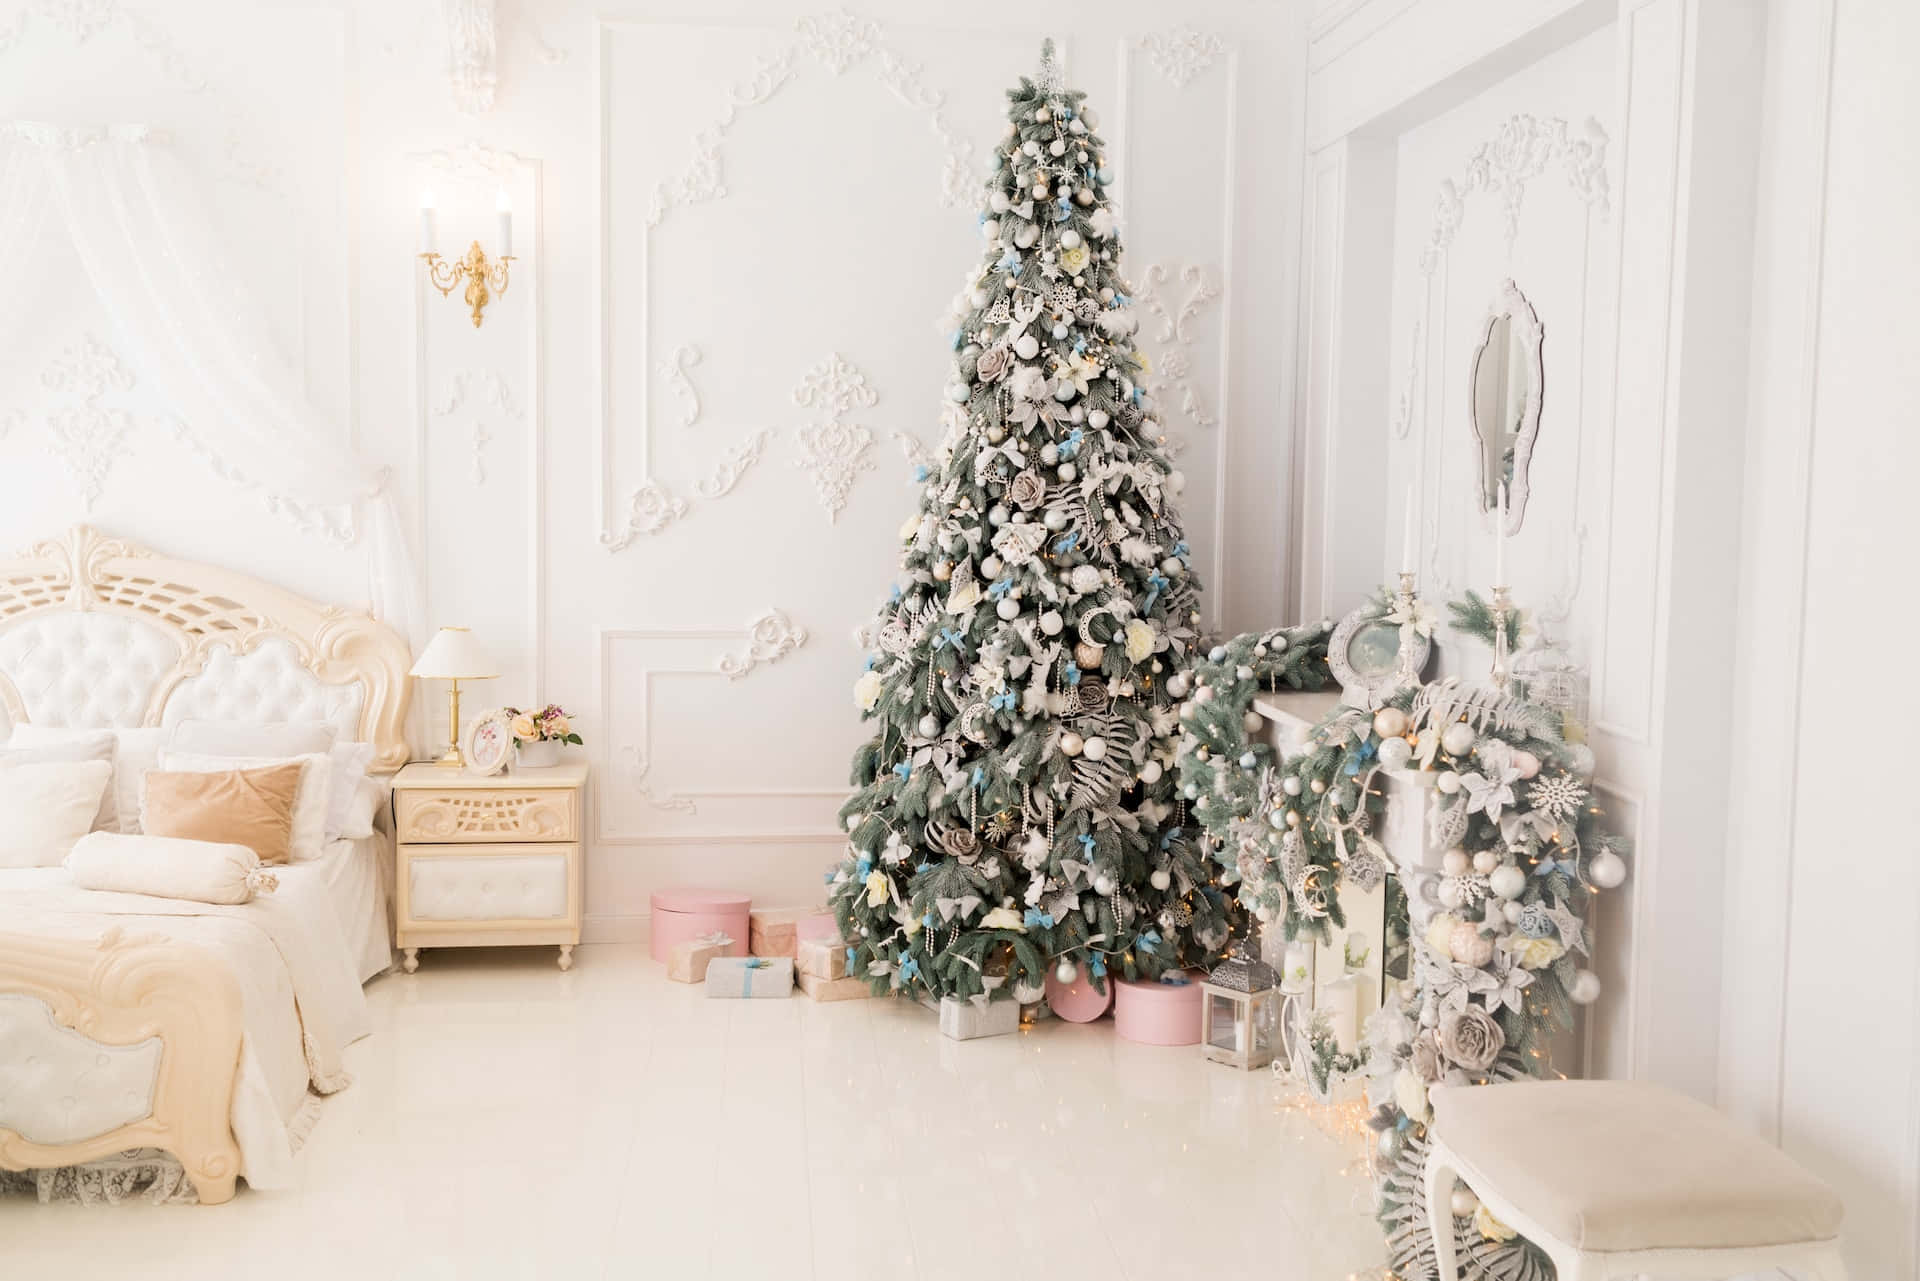 Aesthetic Christmas tree in winter wonderland Wallpaper